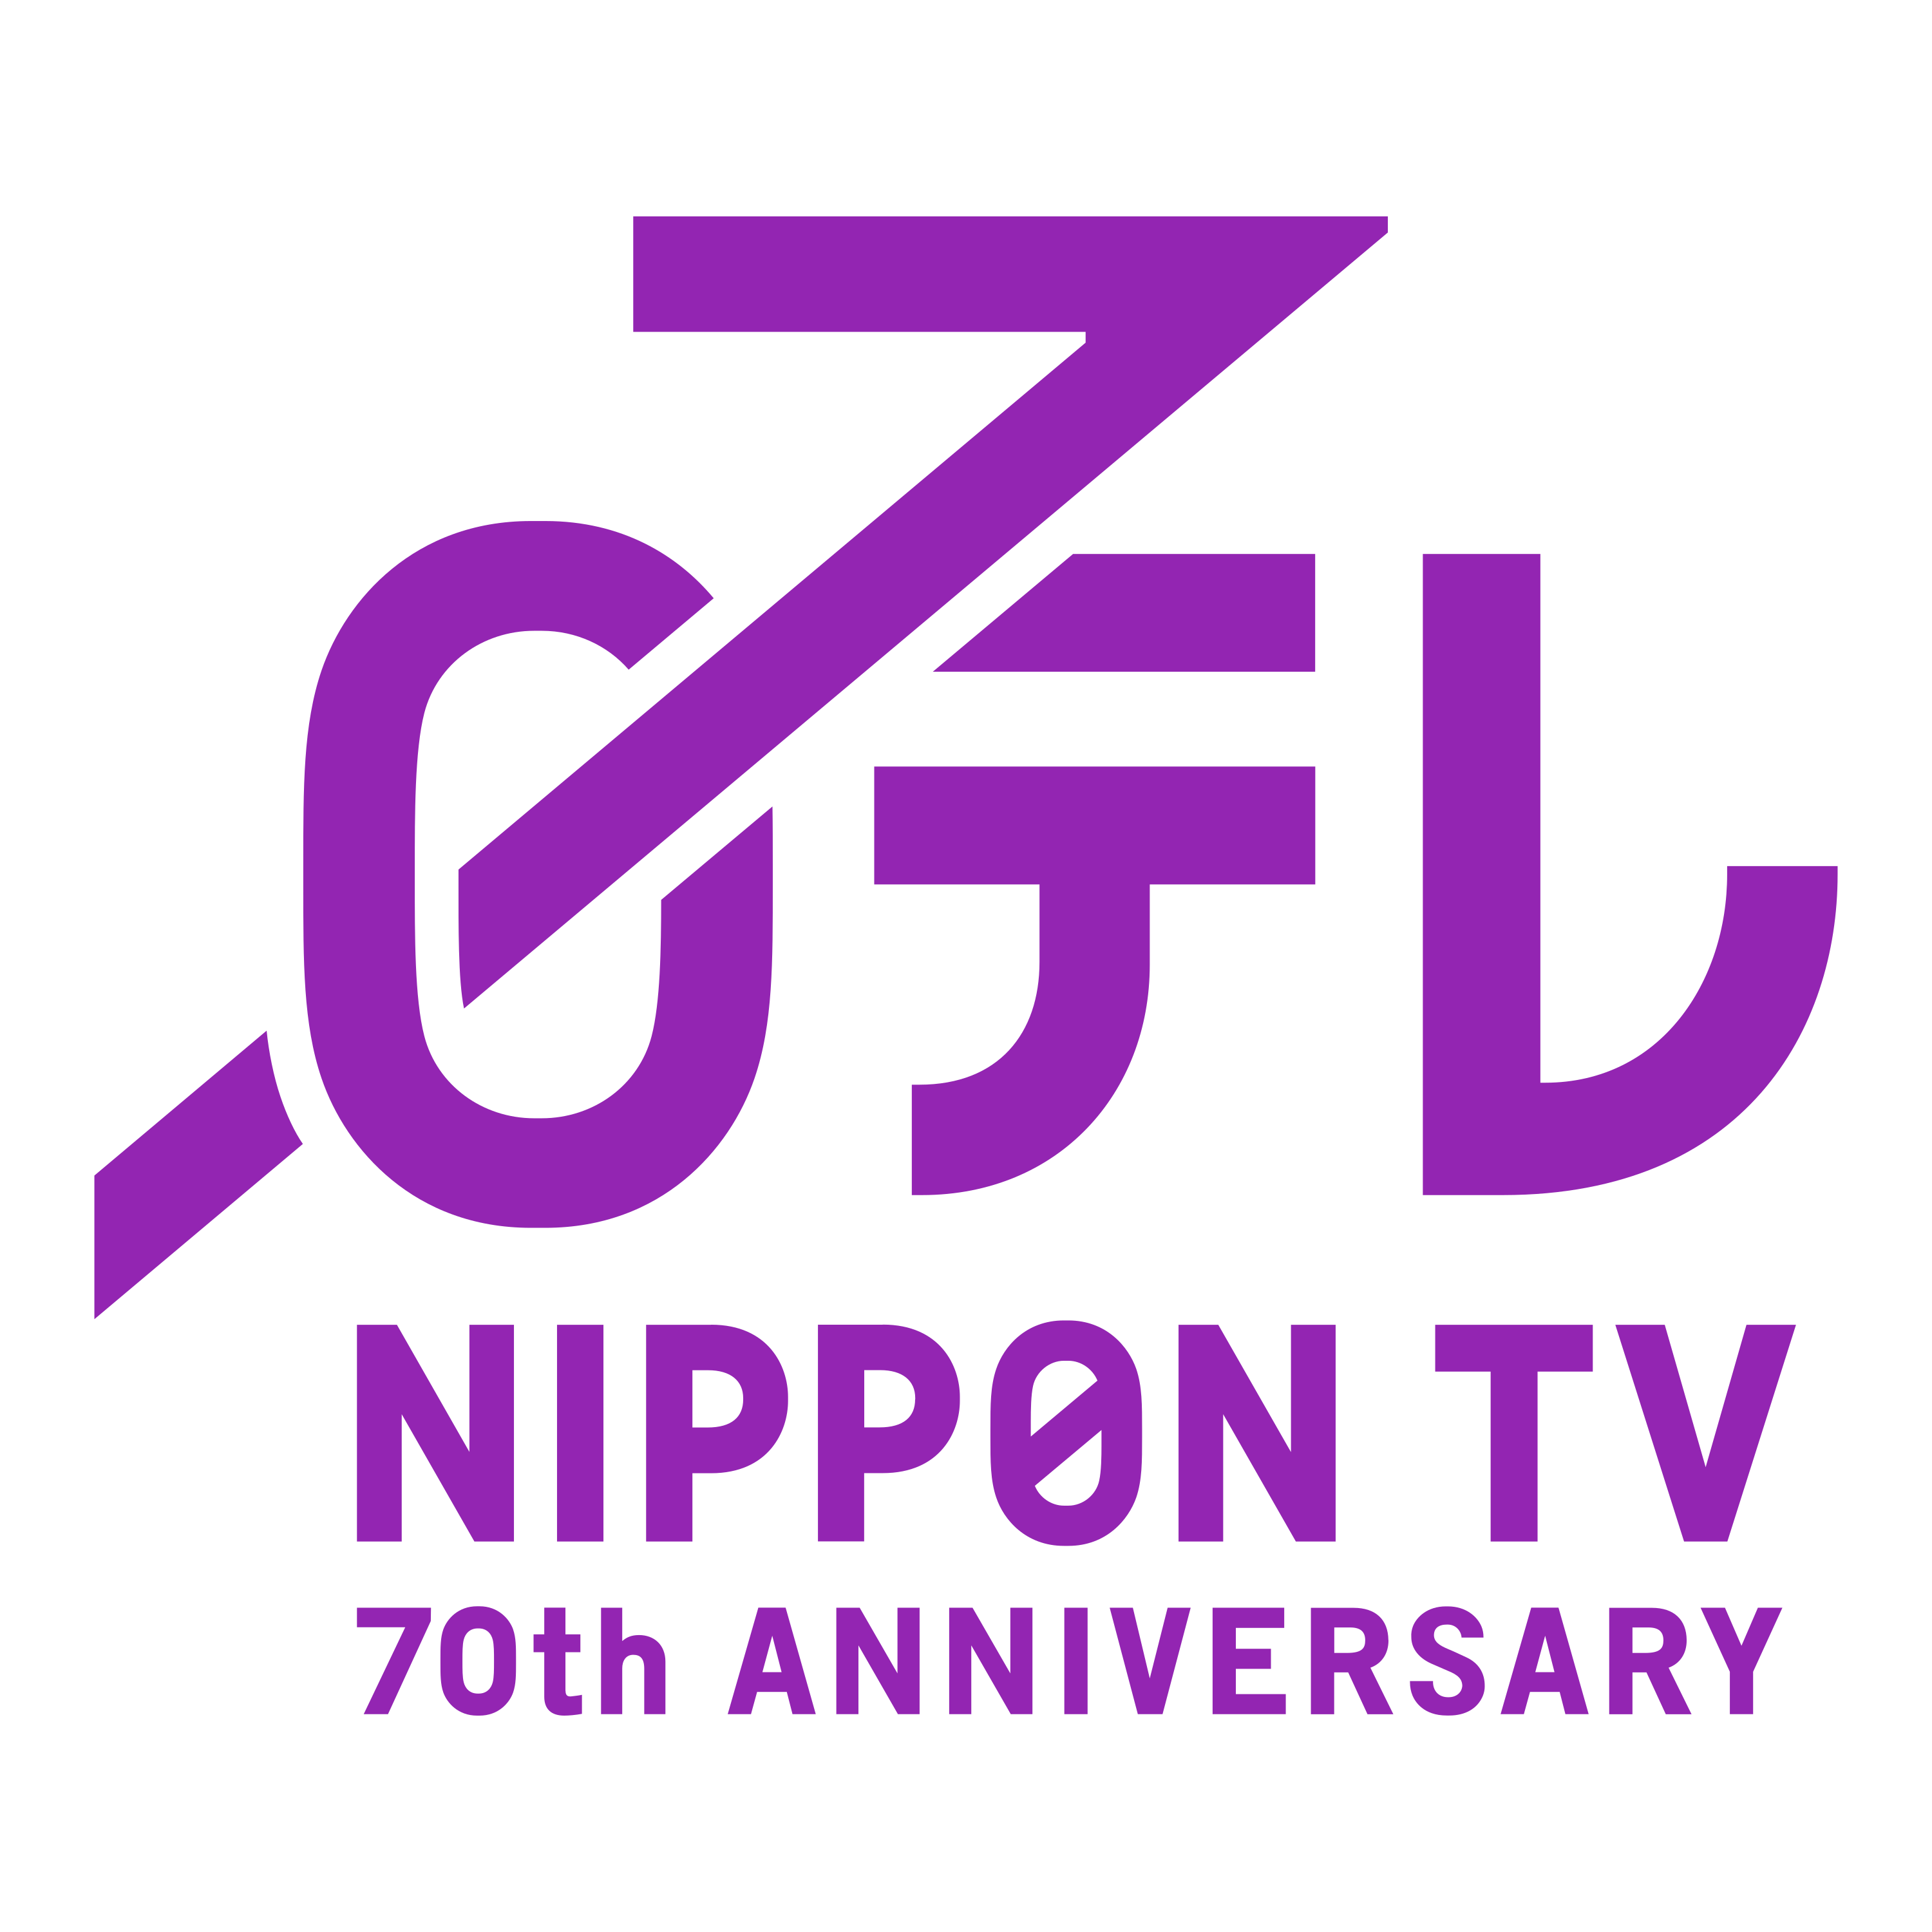 NTV 70th Anniversary Logo  Transparent Image